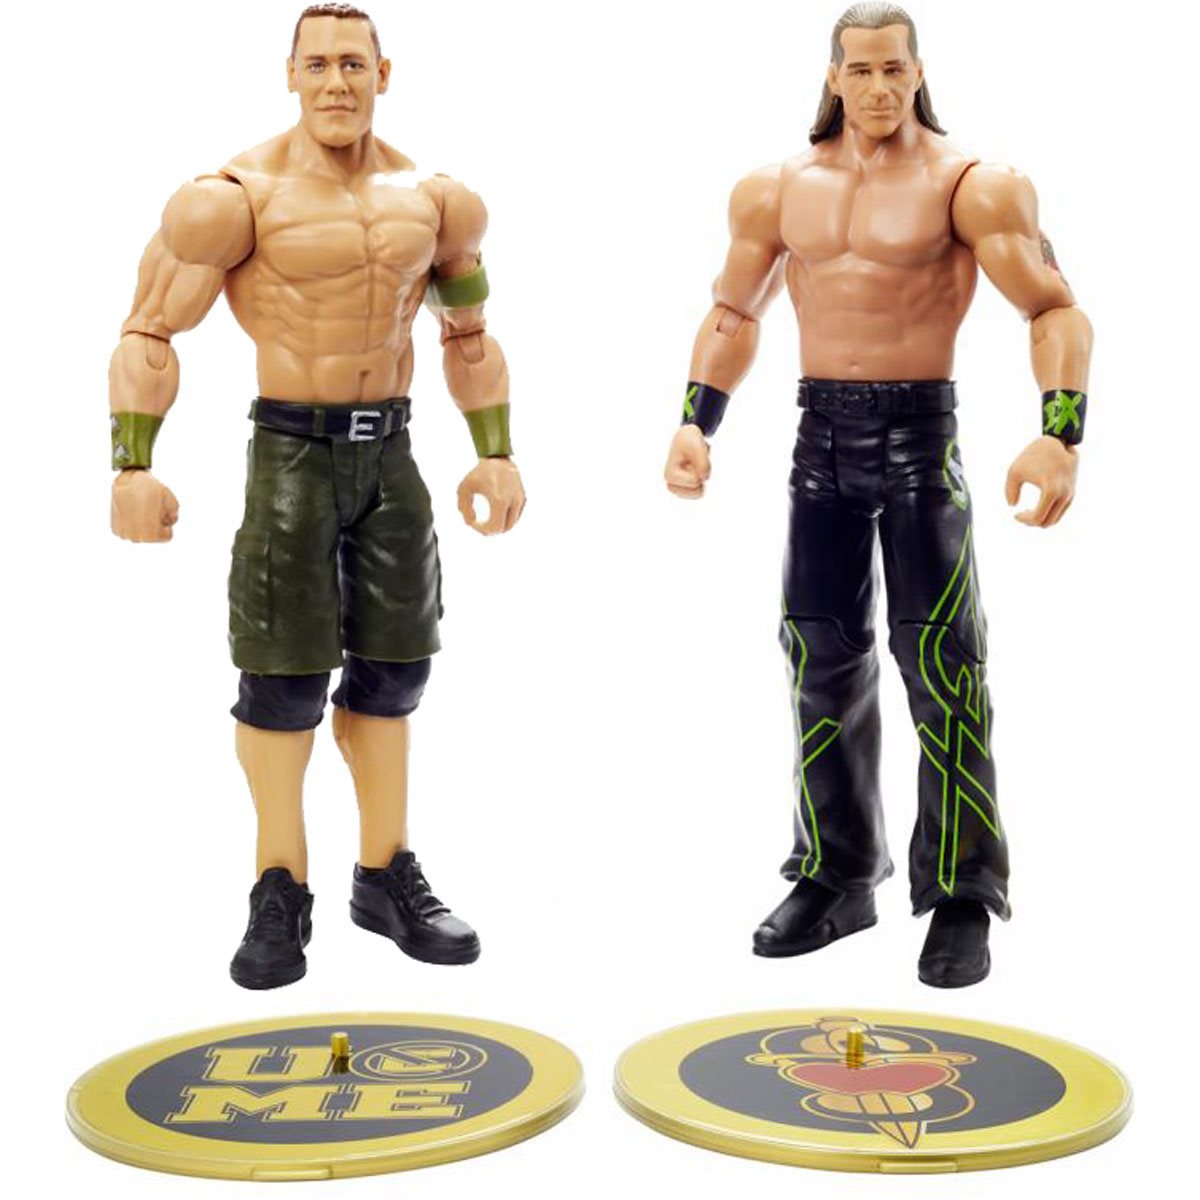 Wwe Championship Showdown Series 6 John Cena And Shawn Michaels Action Figure 2 Pack